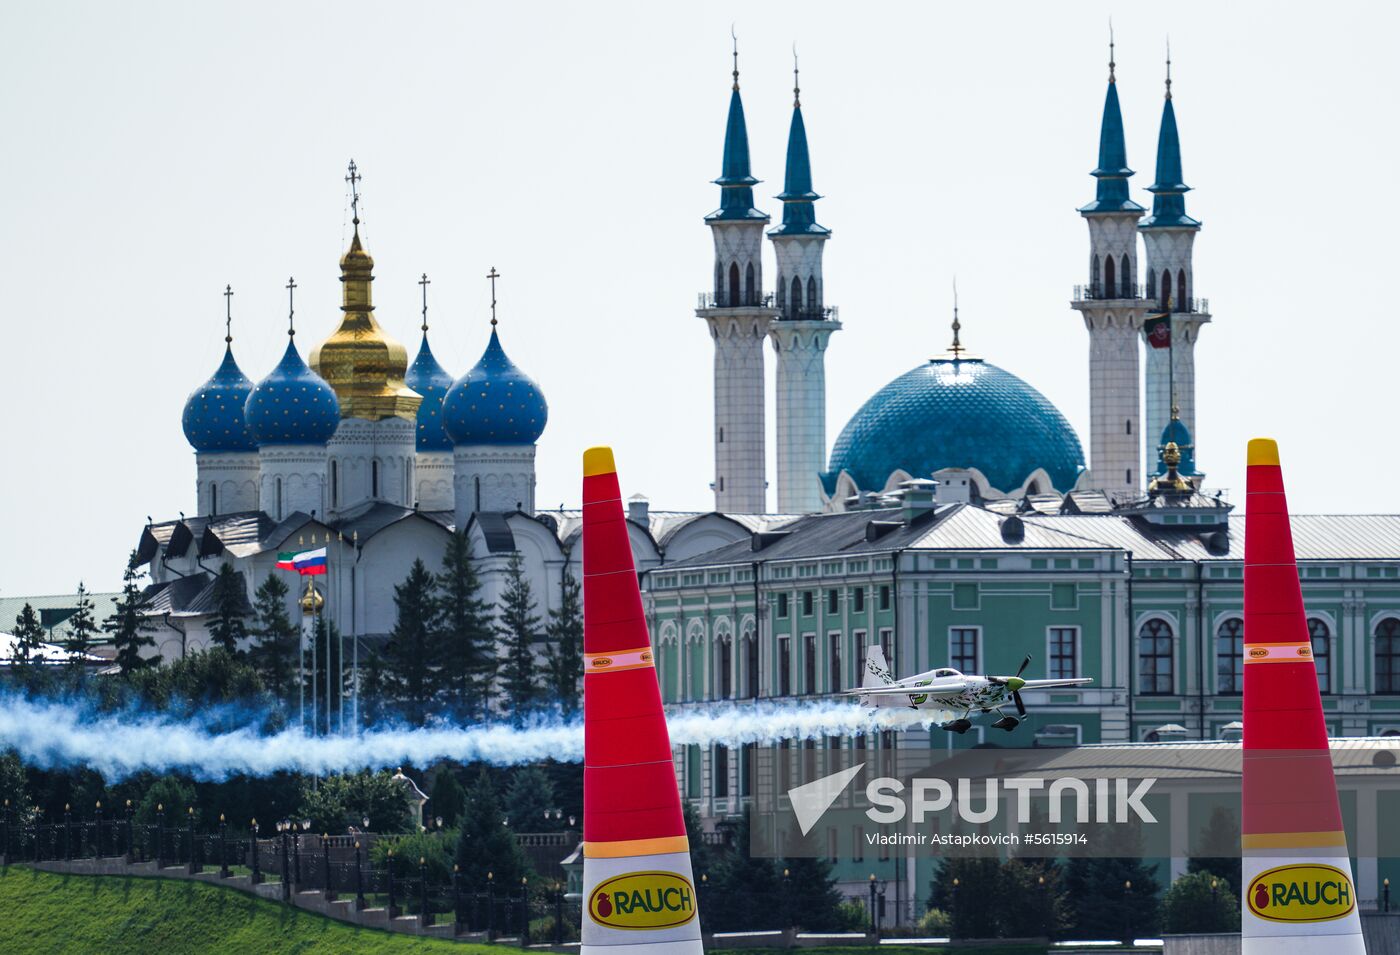 Red Bull Air Race in Kazan. Training session